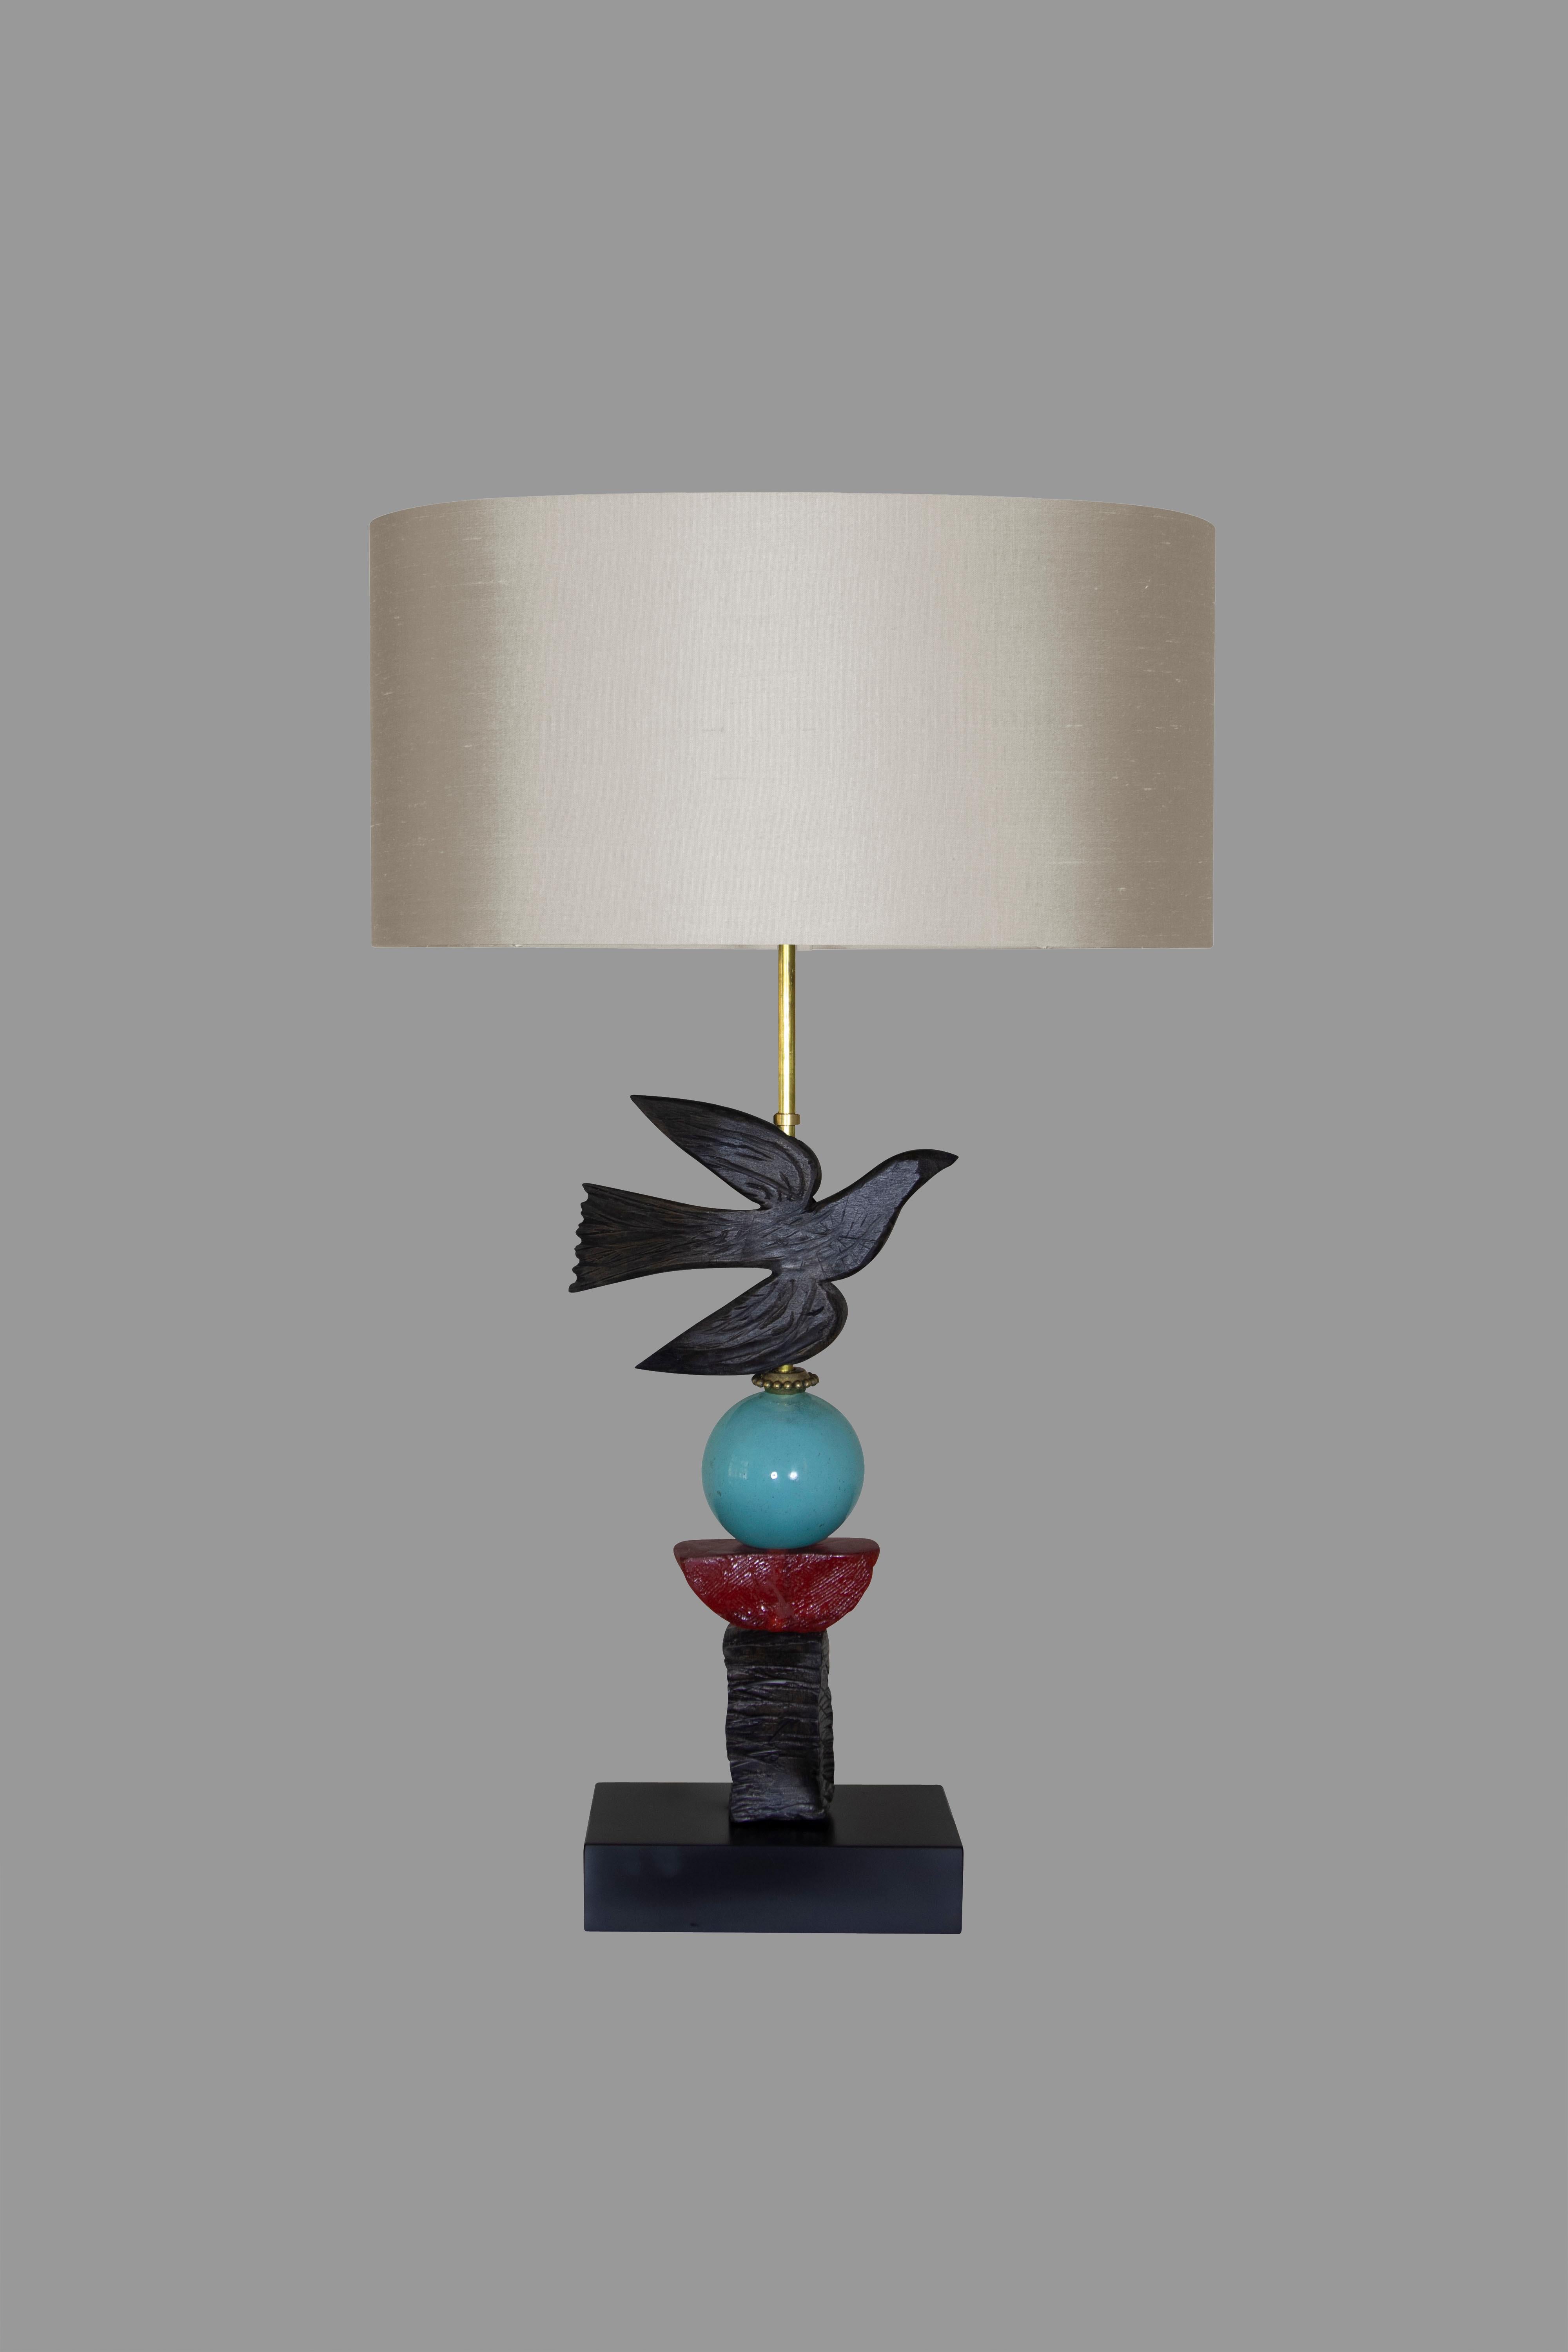 Modern European, Contemporary Bird in Flight Table Lamp by Margit Wittig, Blue Glass